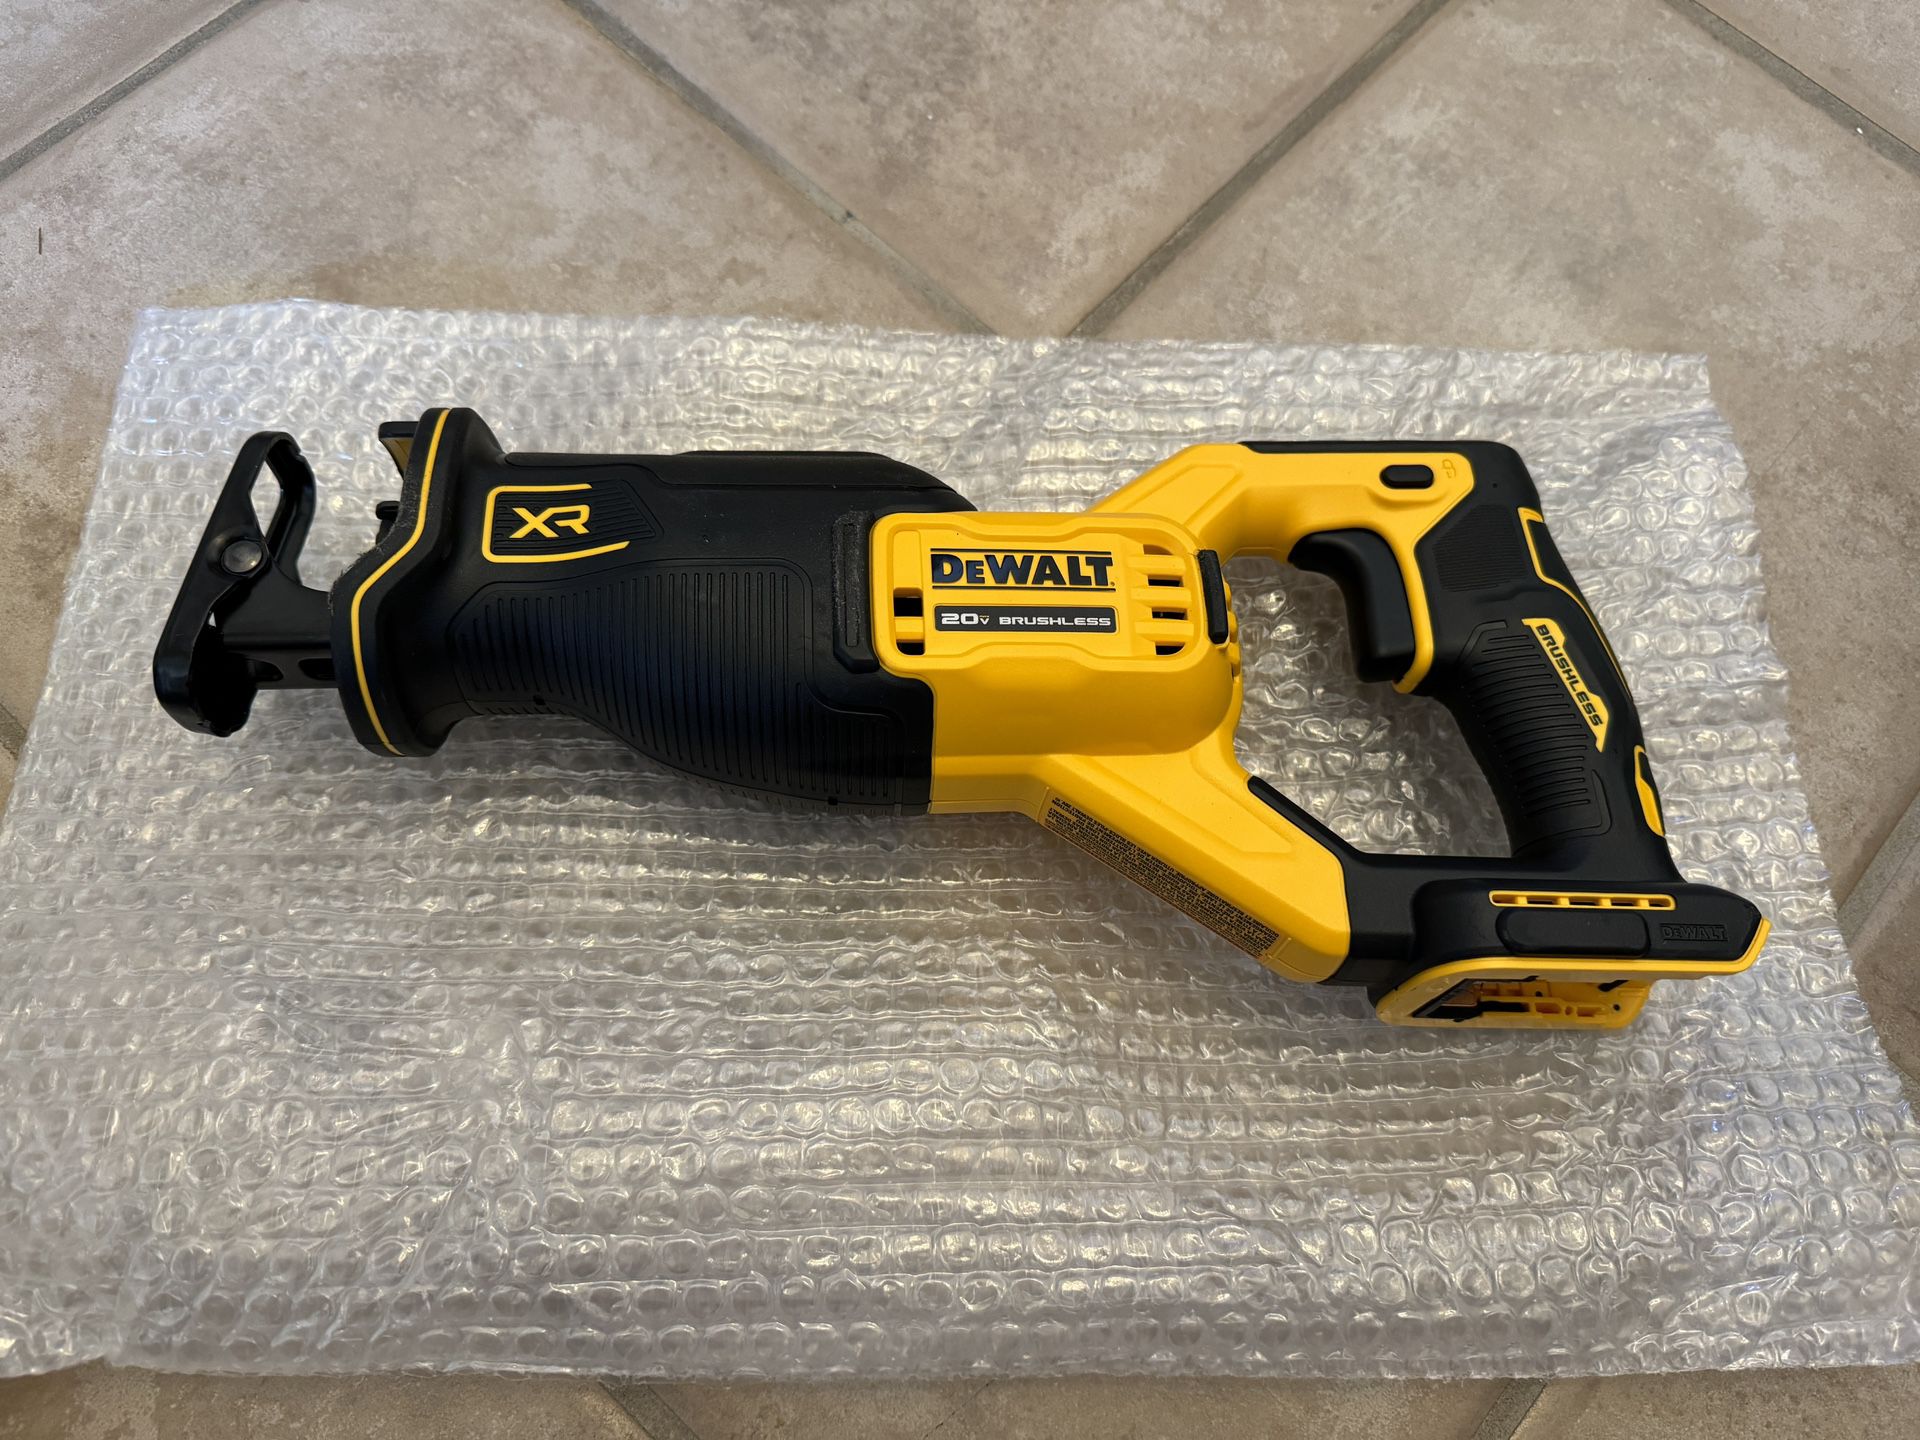 Brand new Dewalt 20V XR Reciprocal saw, tool only